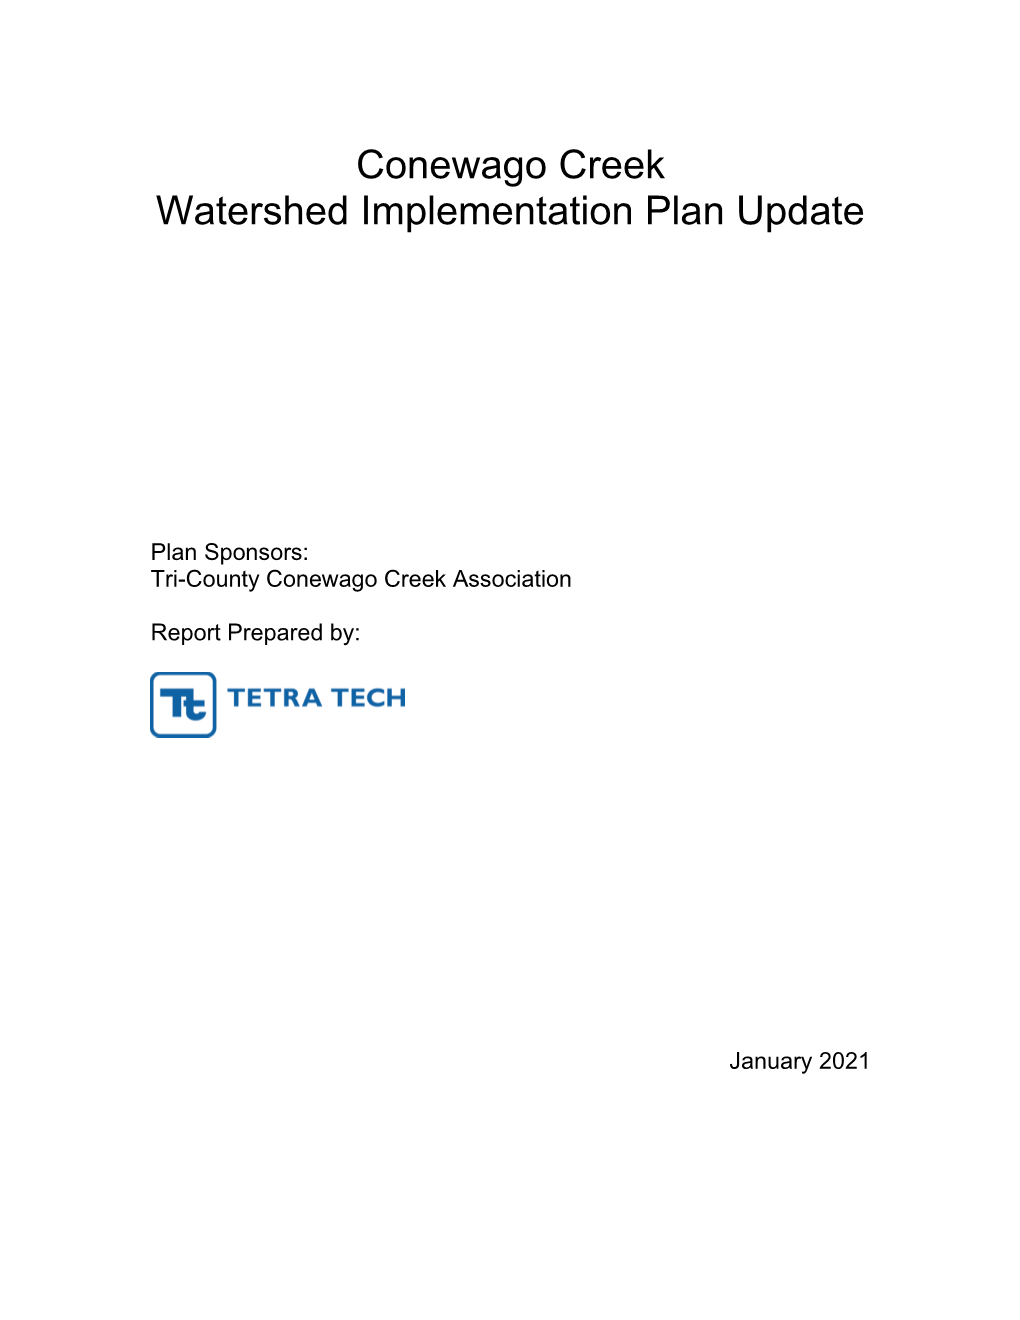 Conewago Creek Watershed Implementation Plan Update